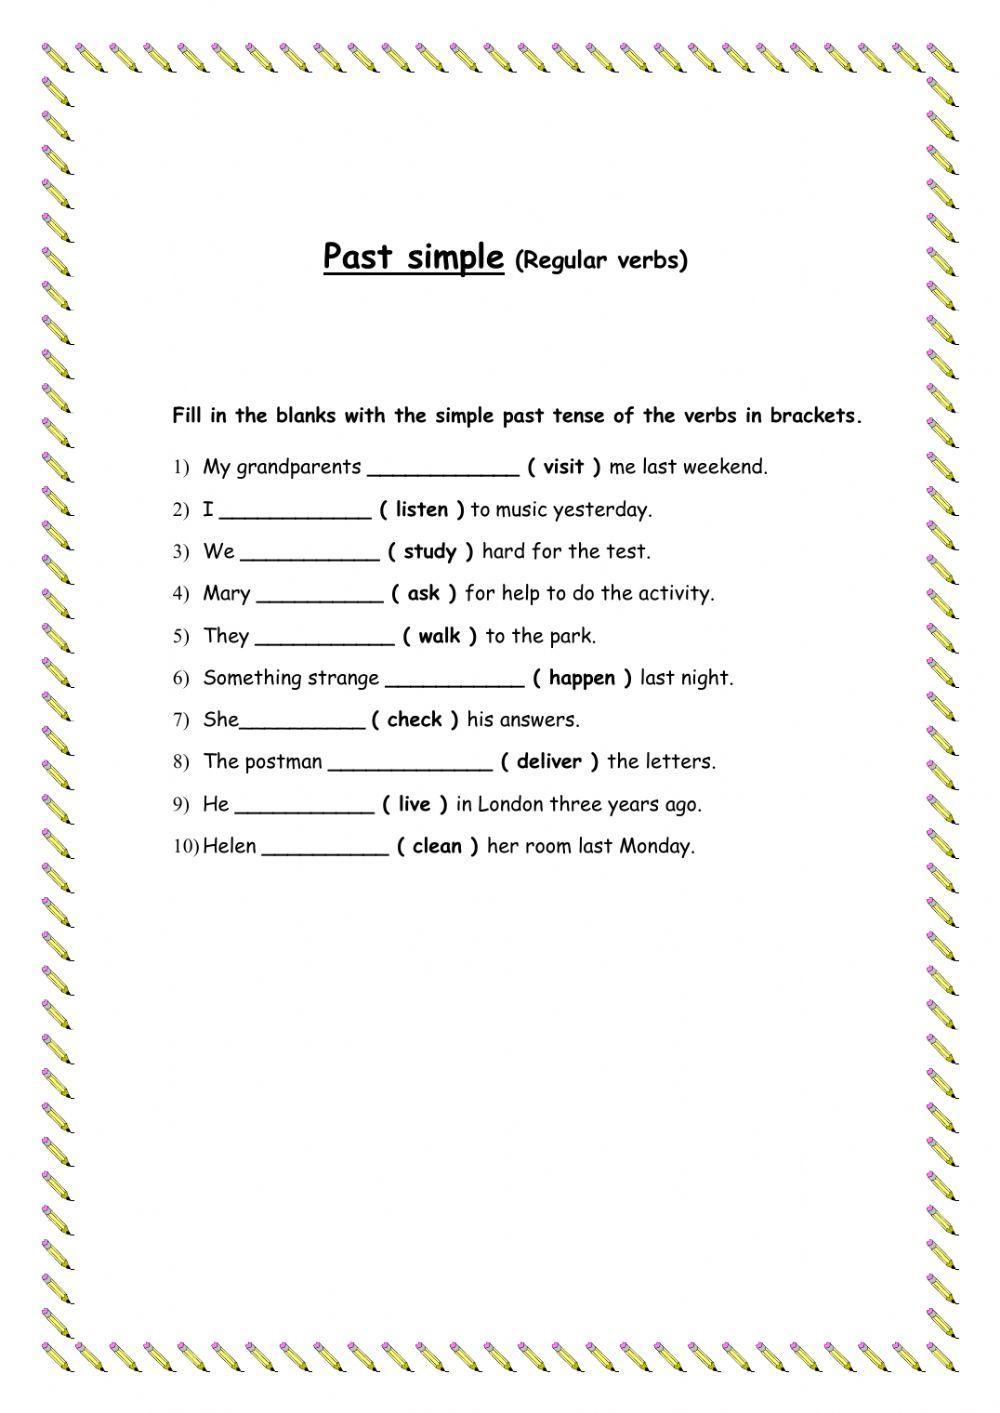 Past simple (regular verbs)